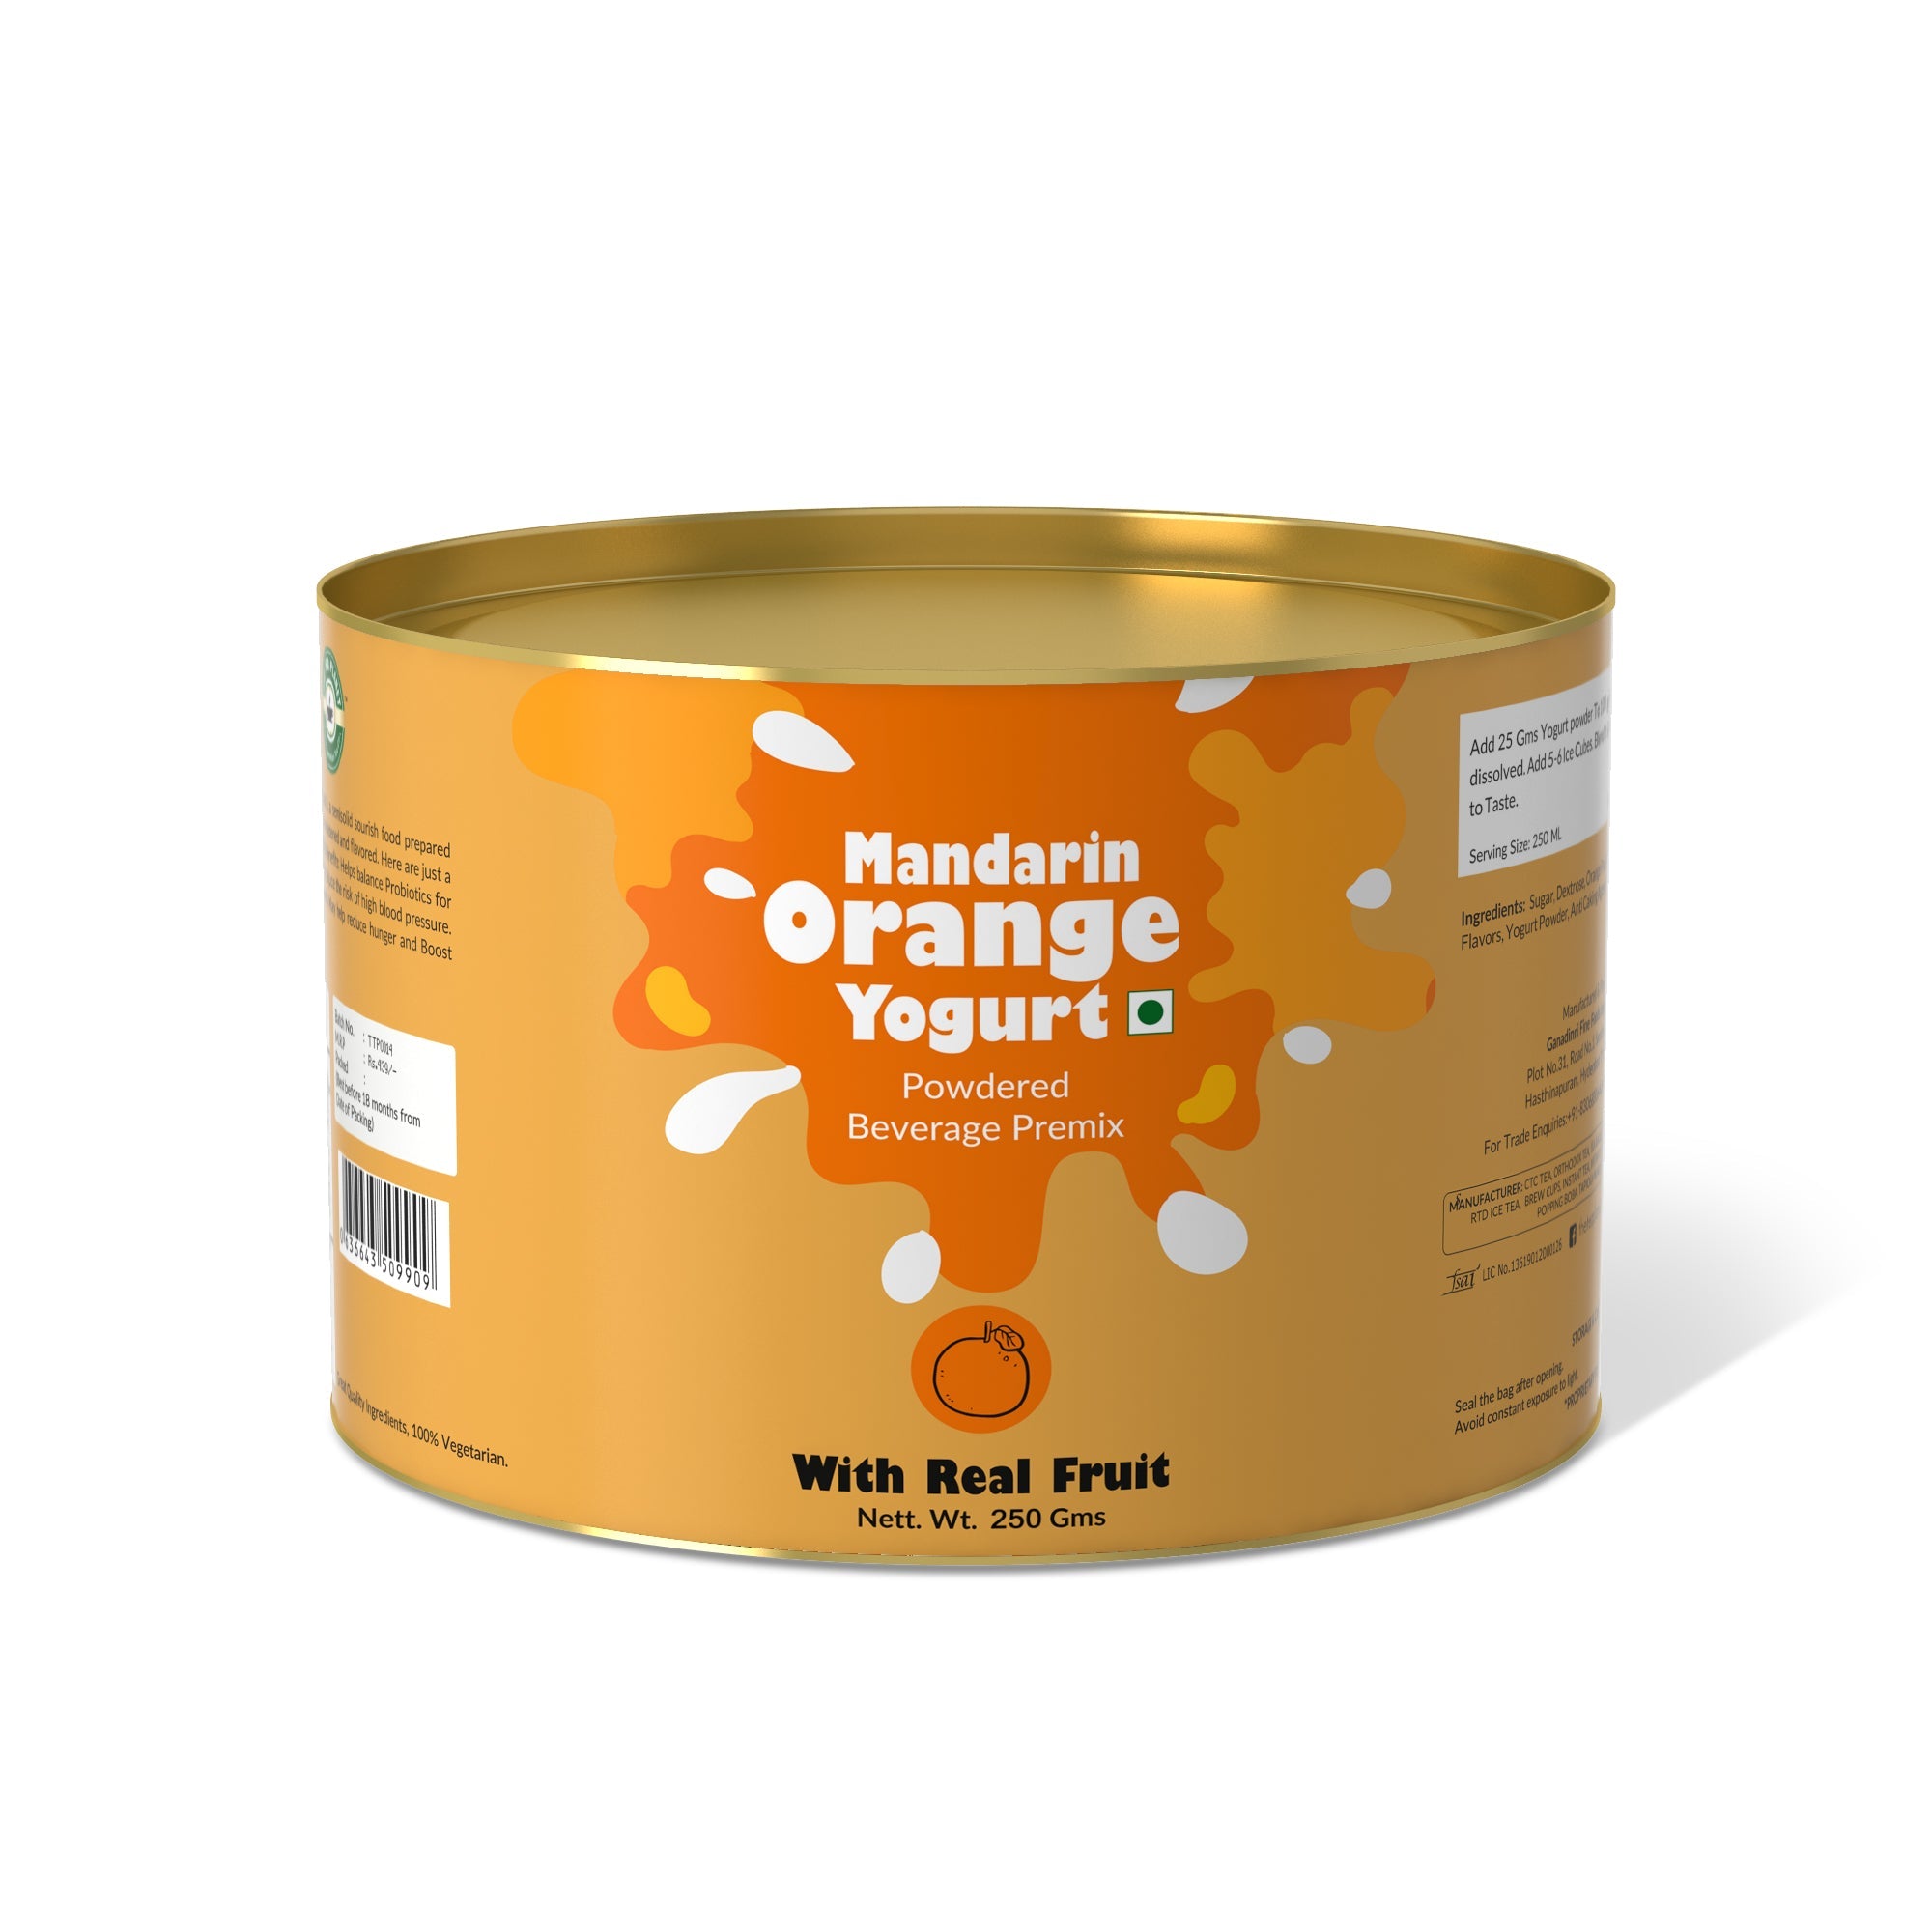 Mandarin Orange Yogurt Mix - 250 gms